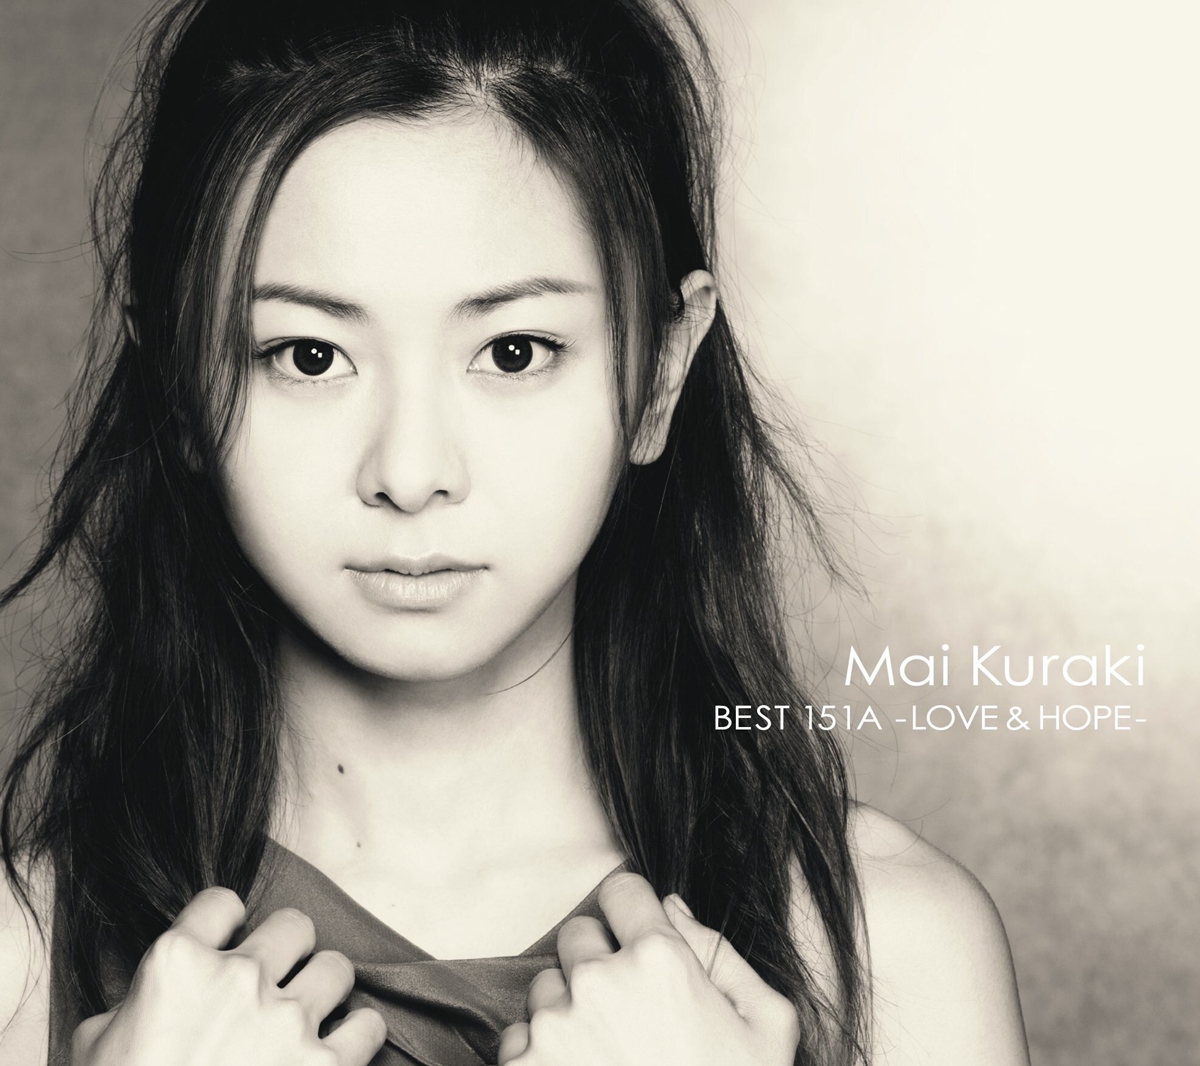 Cover art for『Mai Kuraki - DYNAMITE』from the release『Mai Kuraki BEST 151A -LOVE & HOPE-